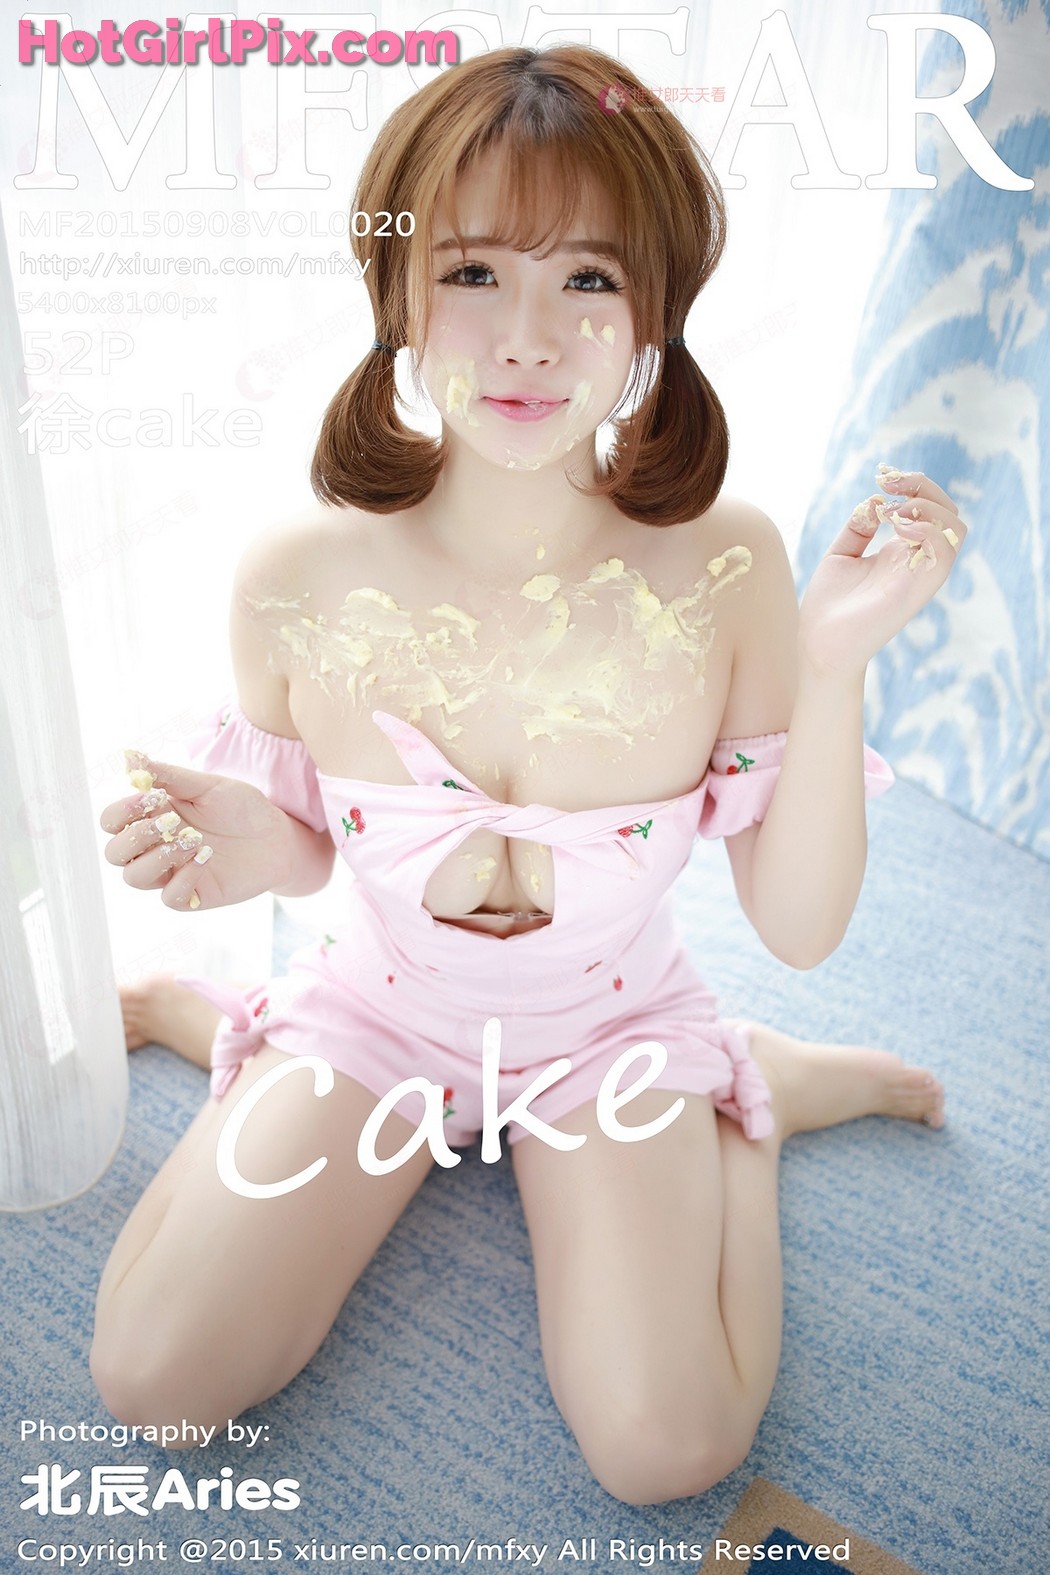 [MFStar] VOL.020 Xu 徐cake Cover Photo